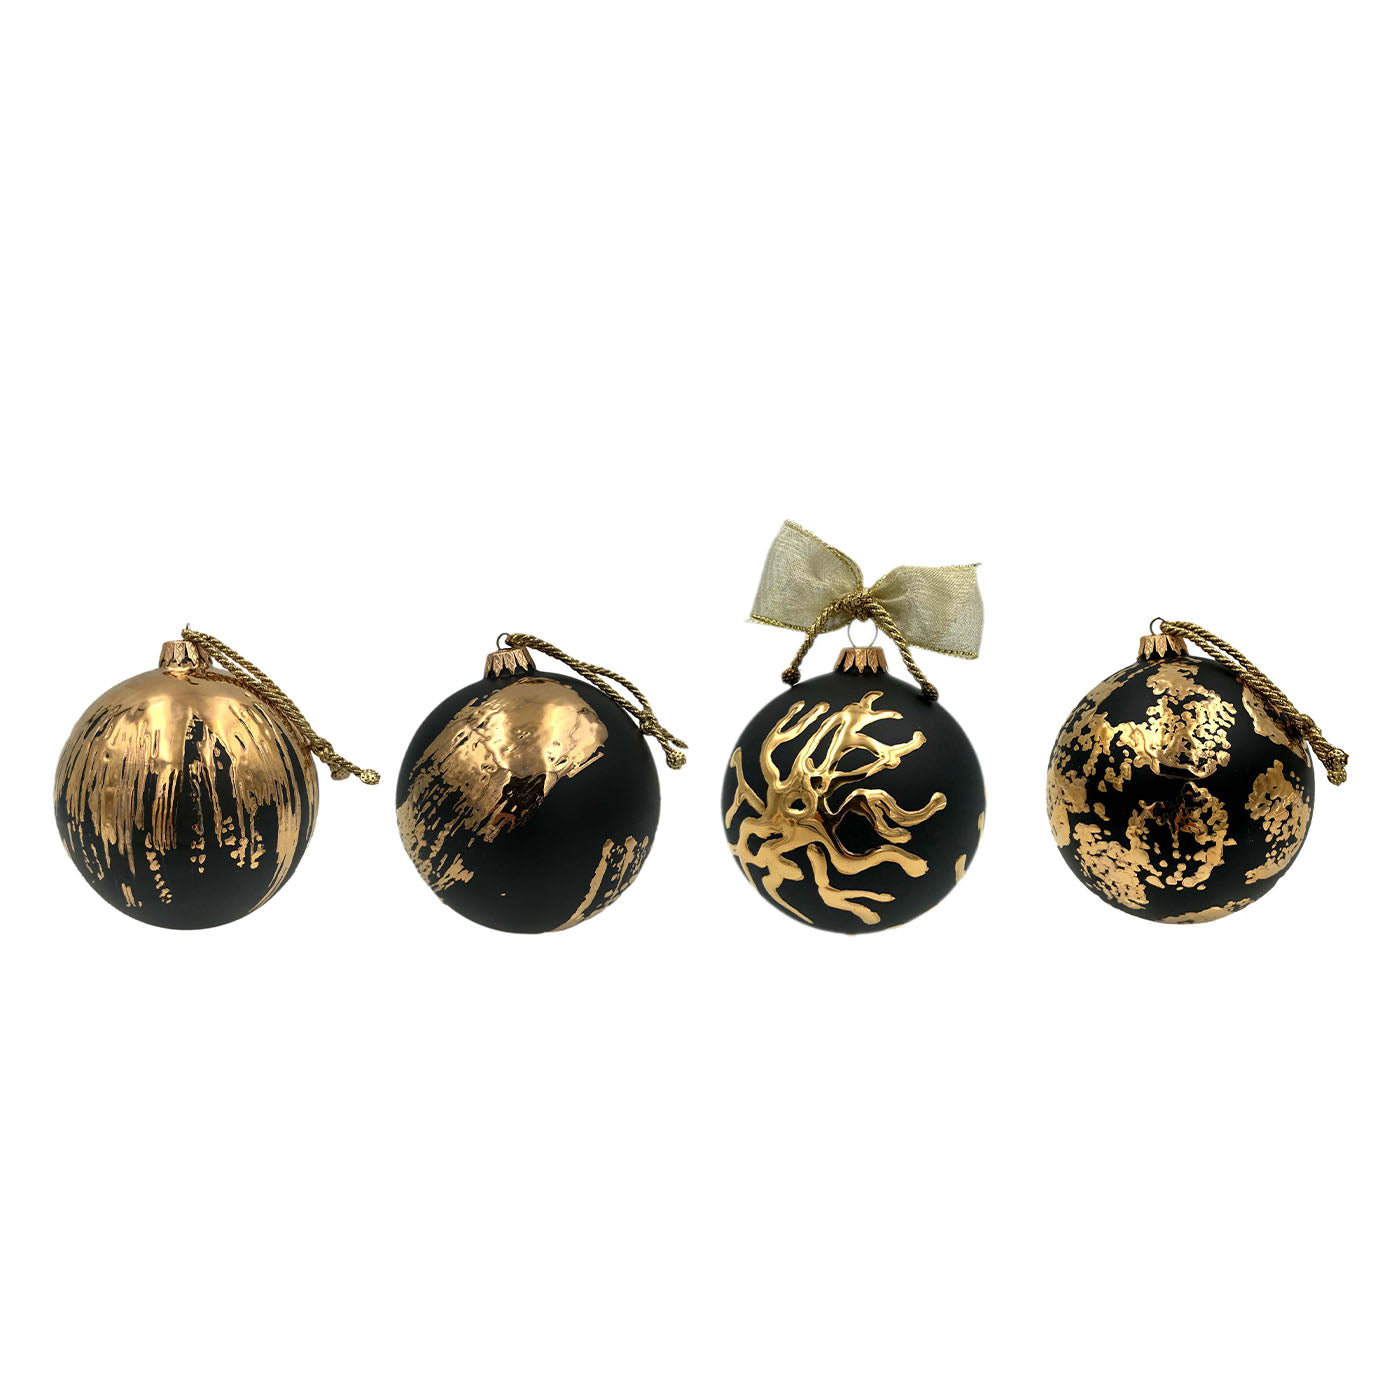 Penellata Ceramic Christmas Ornament Black and Gold - Alternative view 1